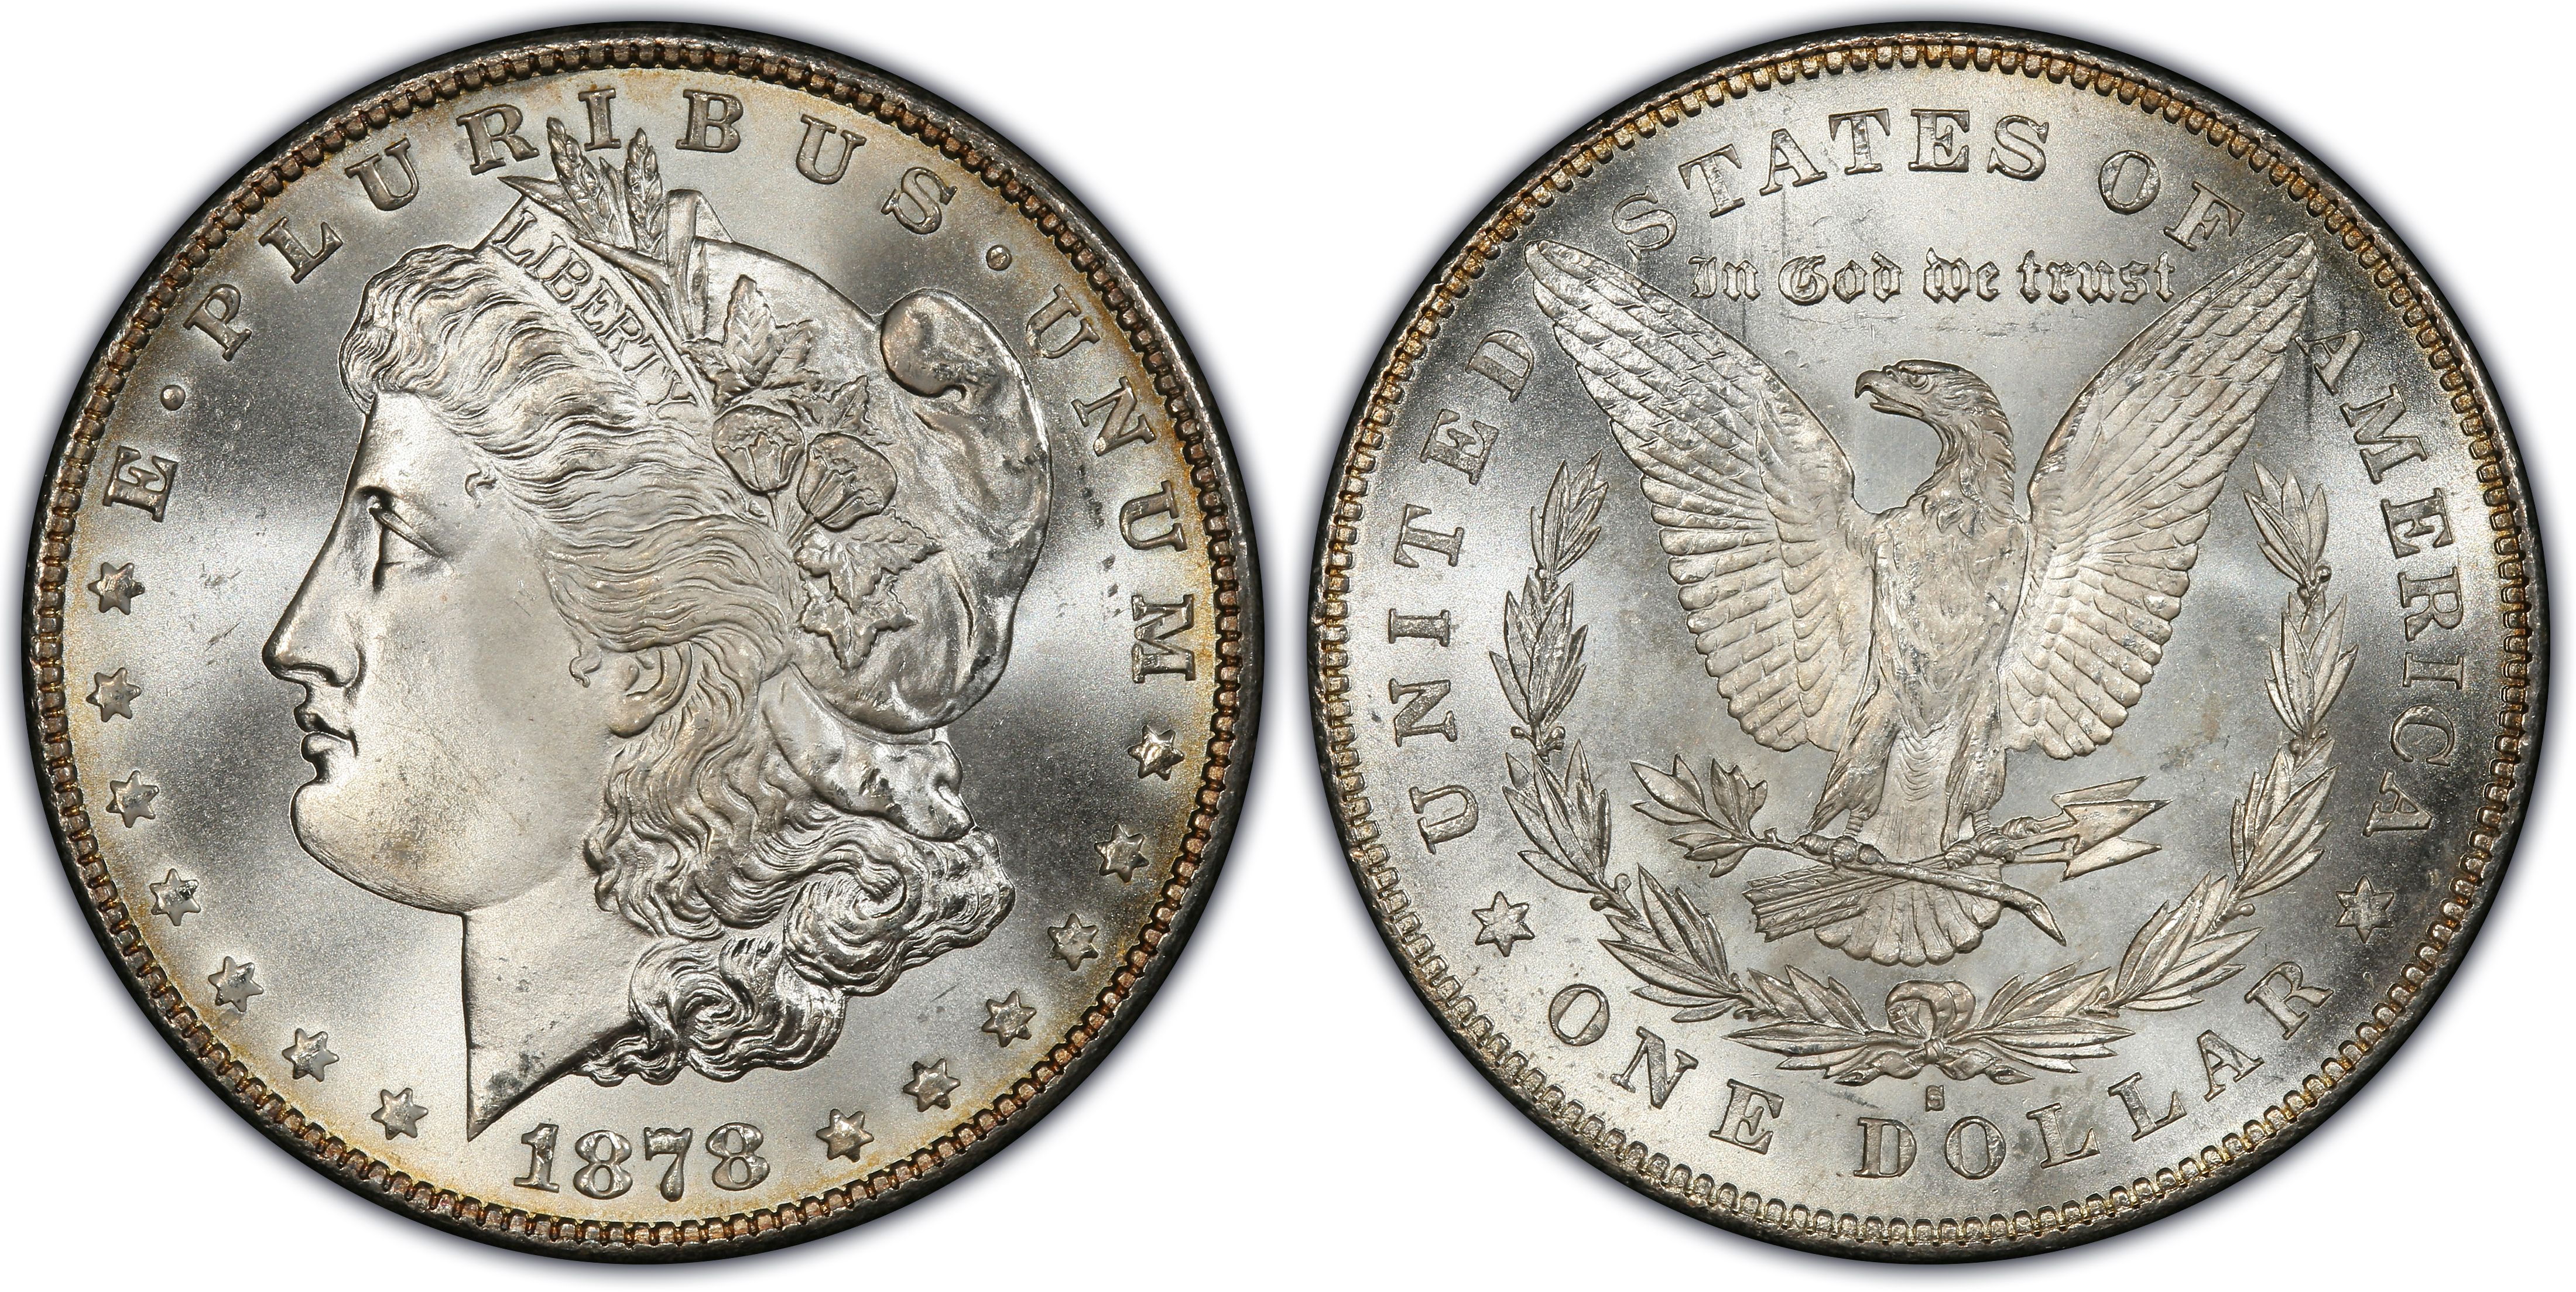 1878 Morgan Silver Dollar - San Francisco - Uncirculated